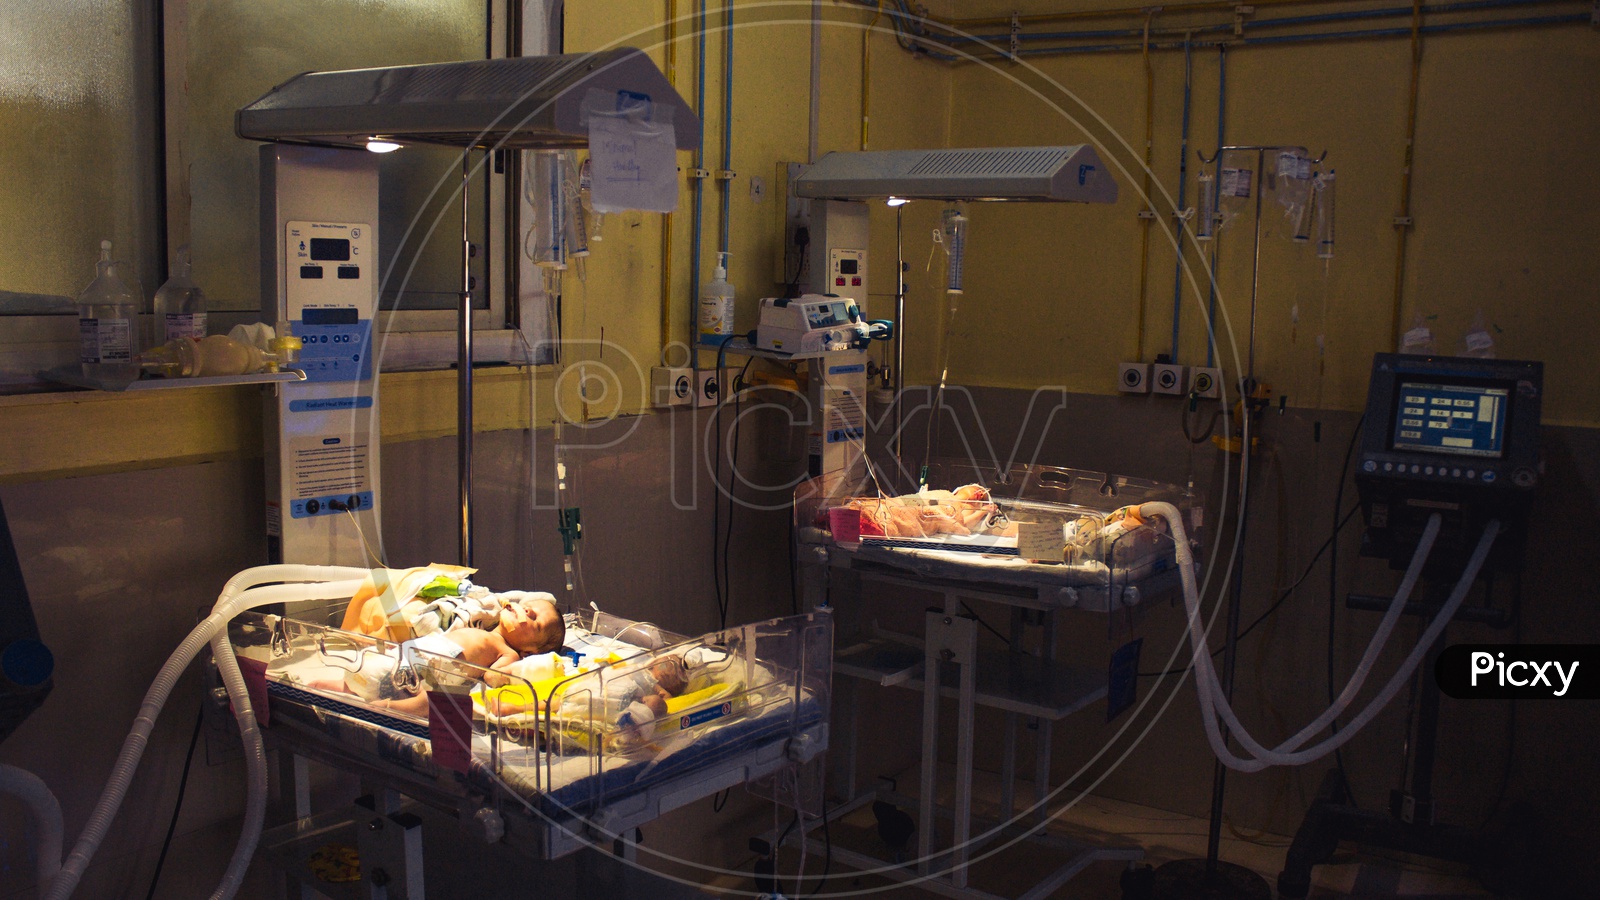 New Born Babies In Incubator At  Hospital Ward